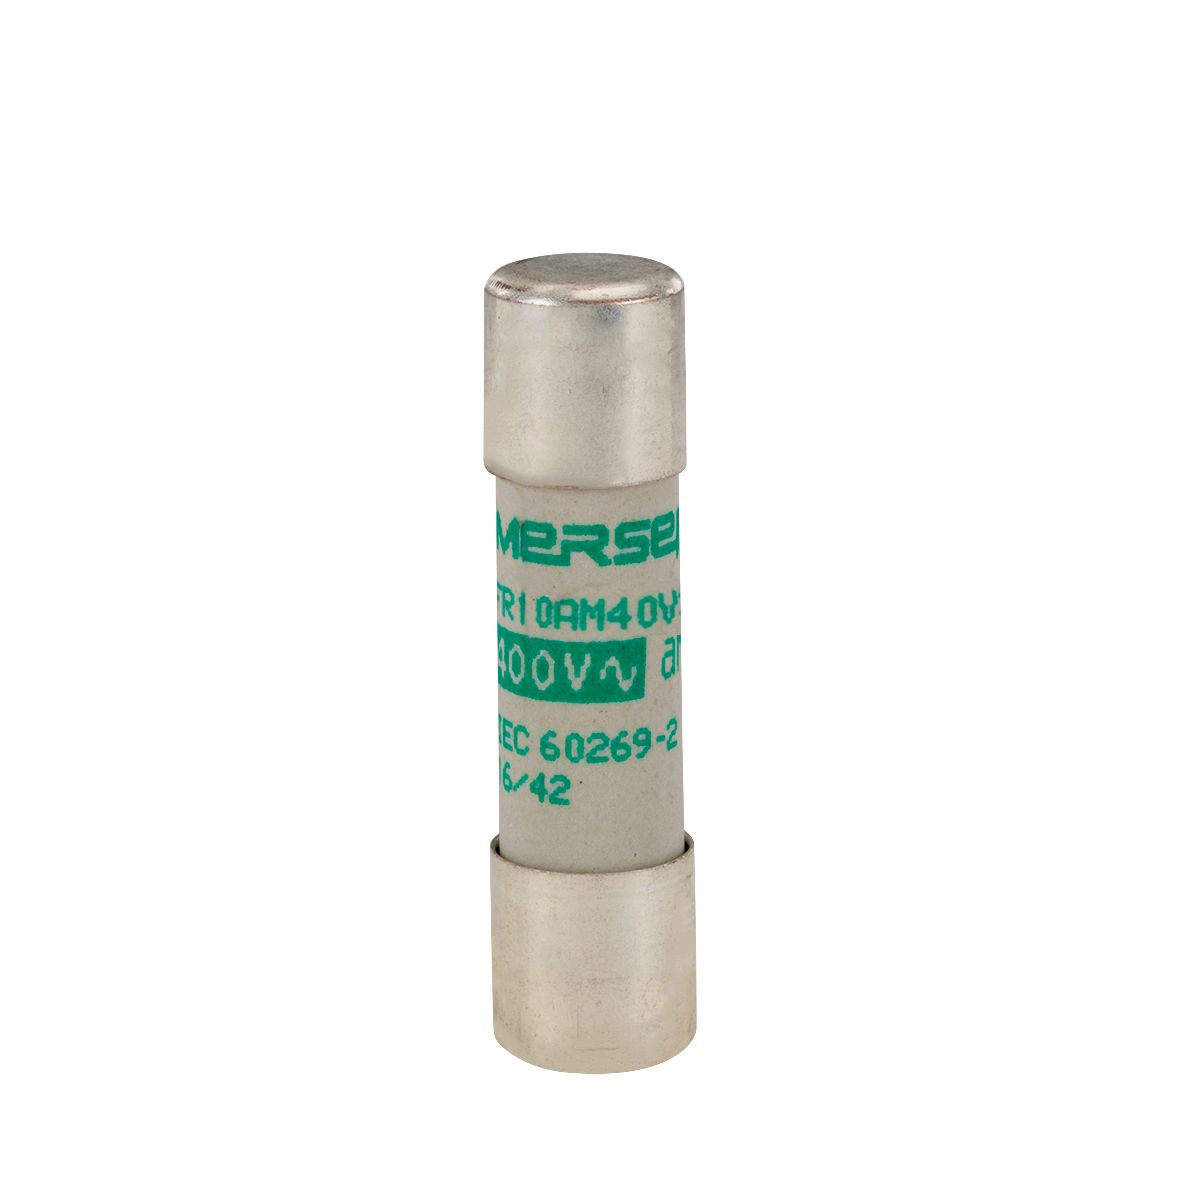 G217172 - Cylindrical fuse-link aM 400VAC 10.3x38, 25A